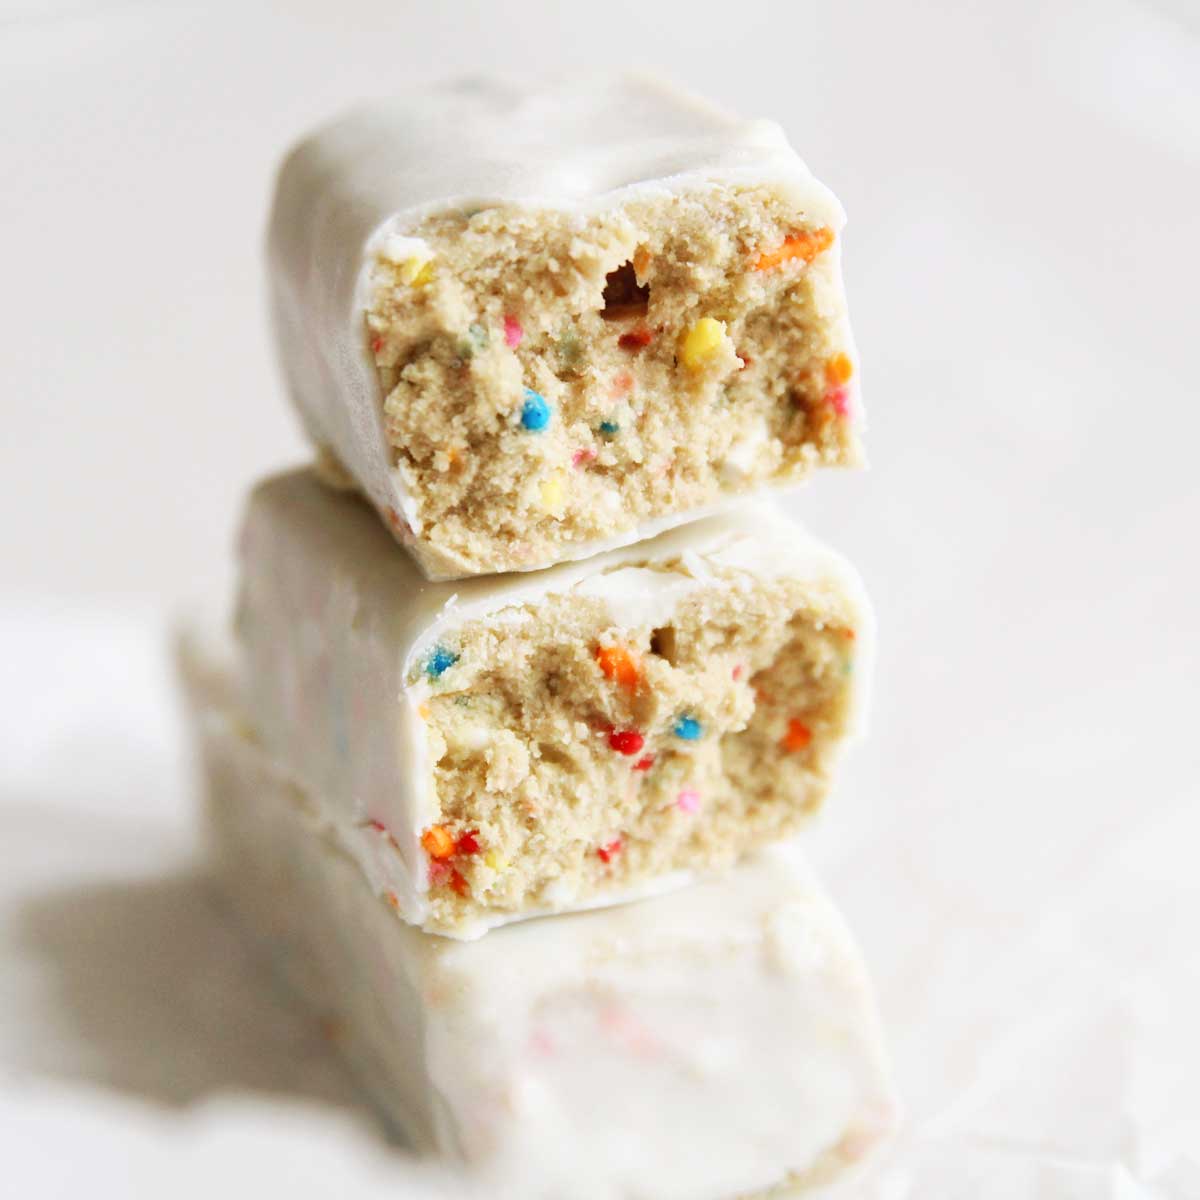 Applesauce Birthday Cake Protein Bars Recipe (Nut-Free, Plant-Based) - Pistachio Nice Cream